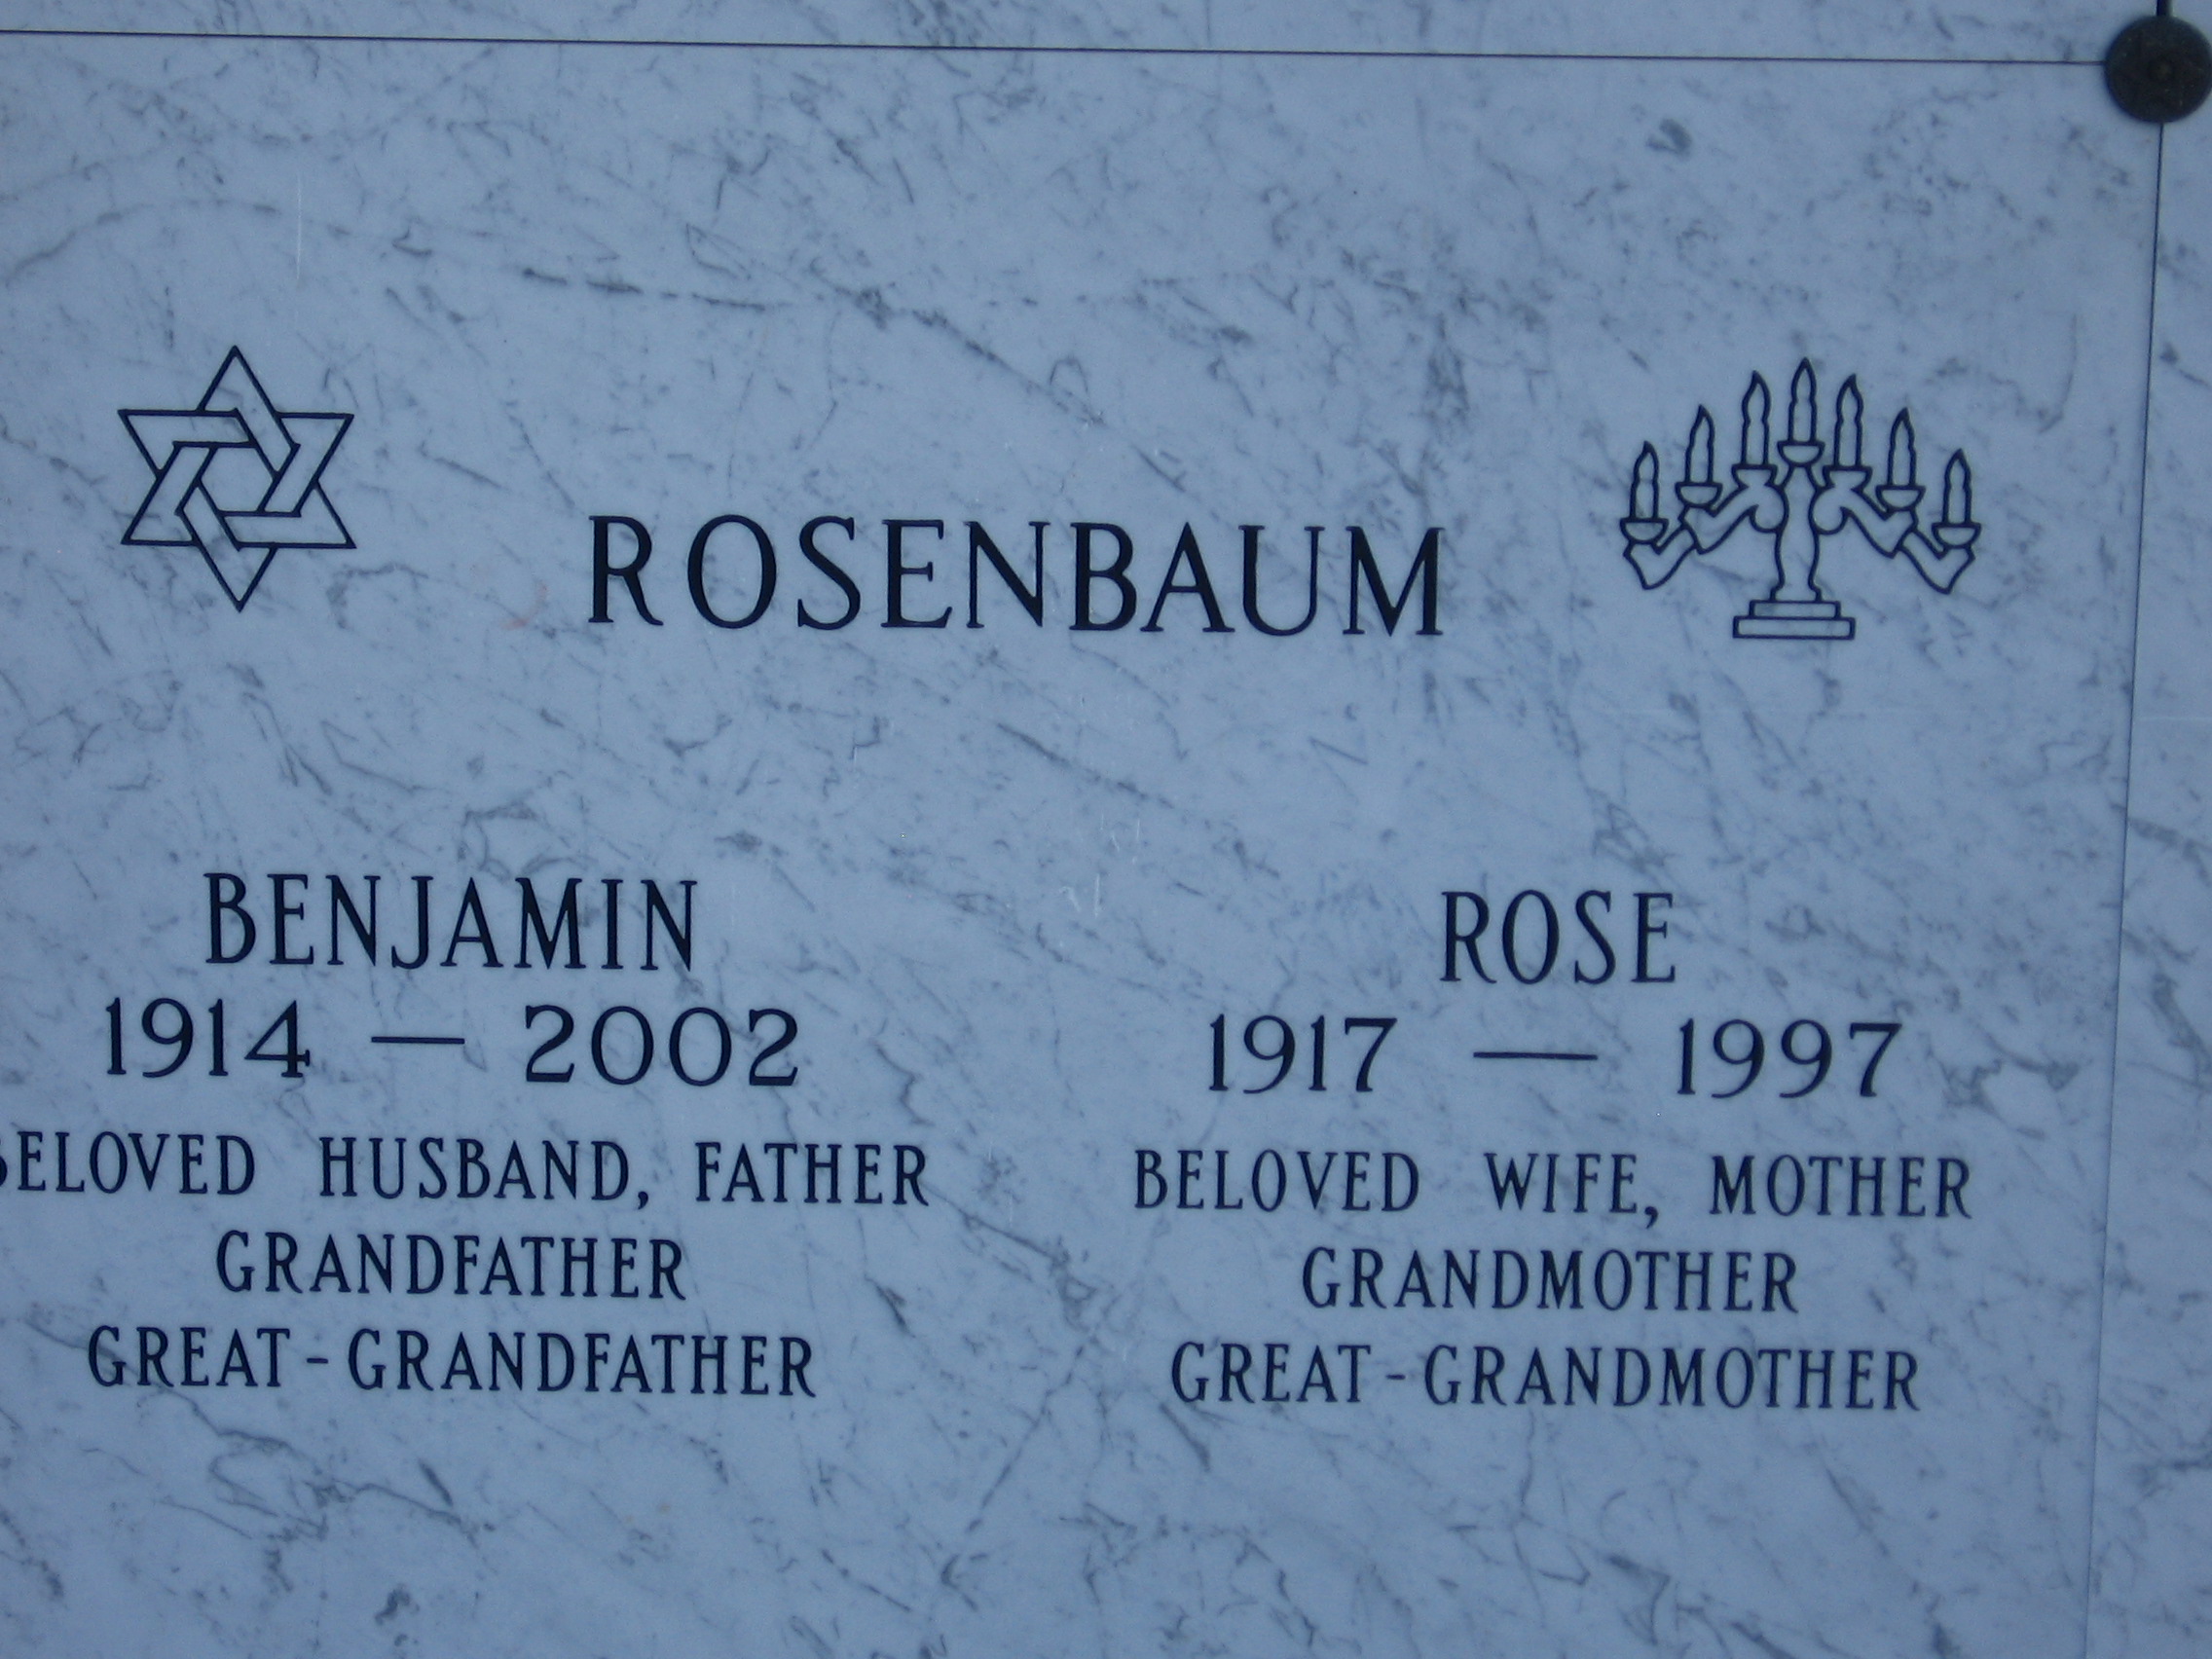 Benjamin Rosenbaum